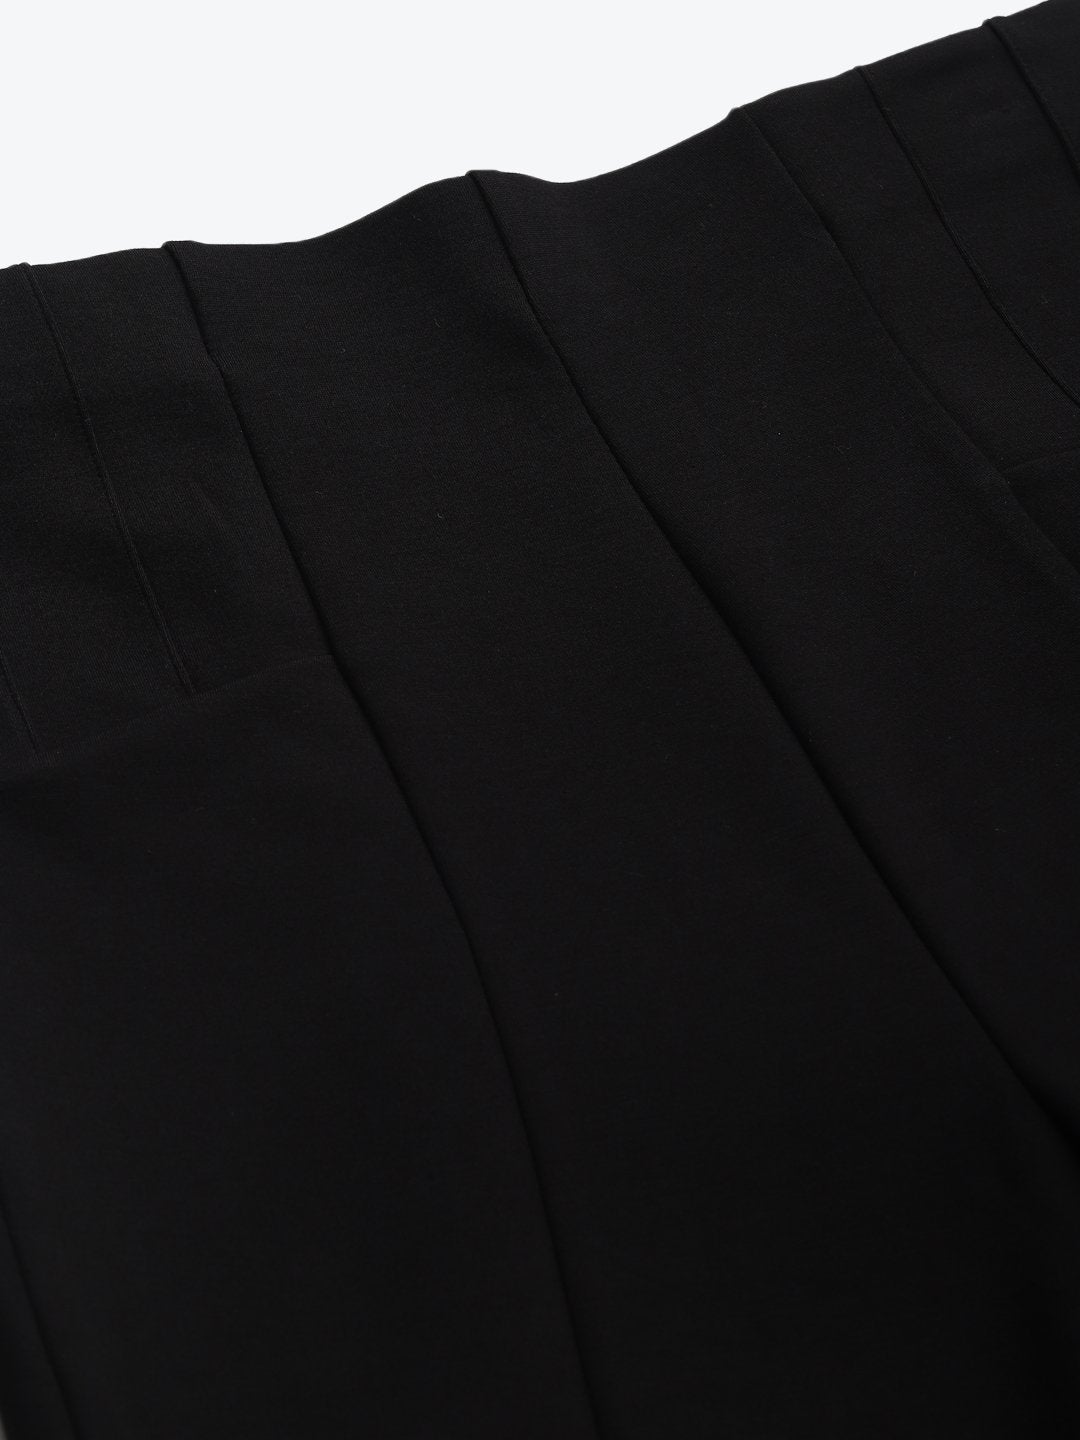 Women's Black Back Zipper High Waist Jeggings - SASSAFRAS